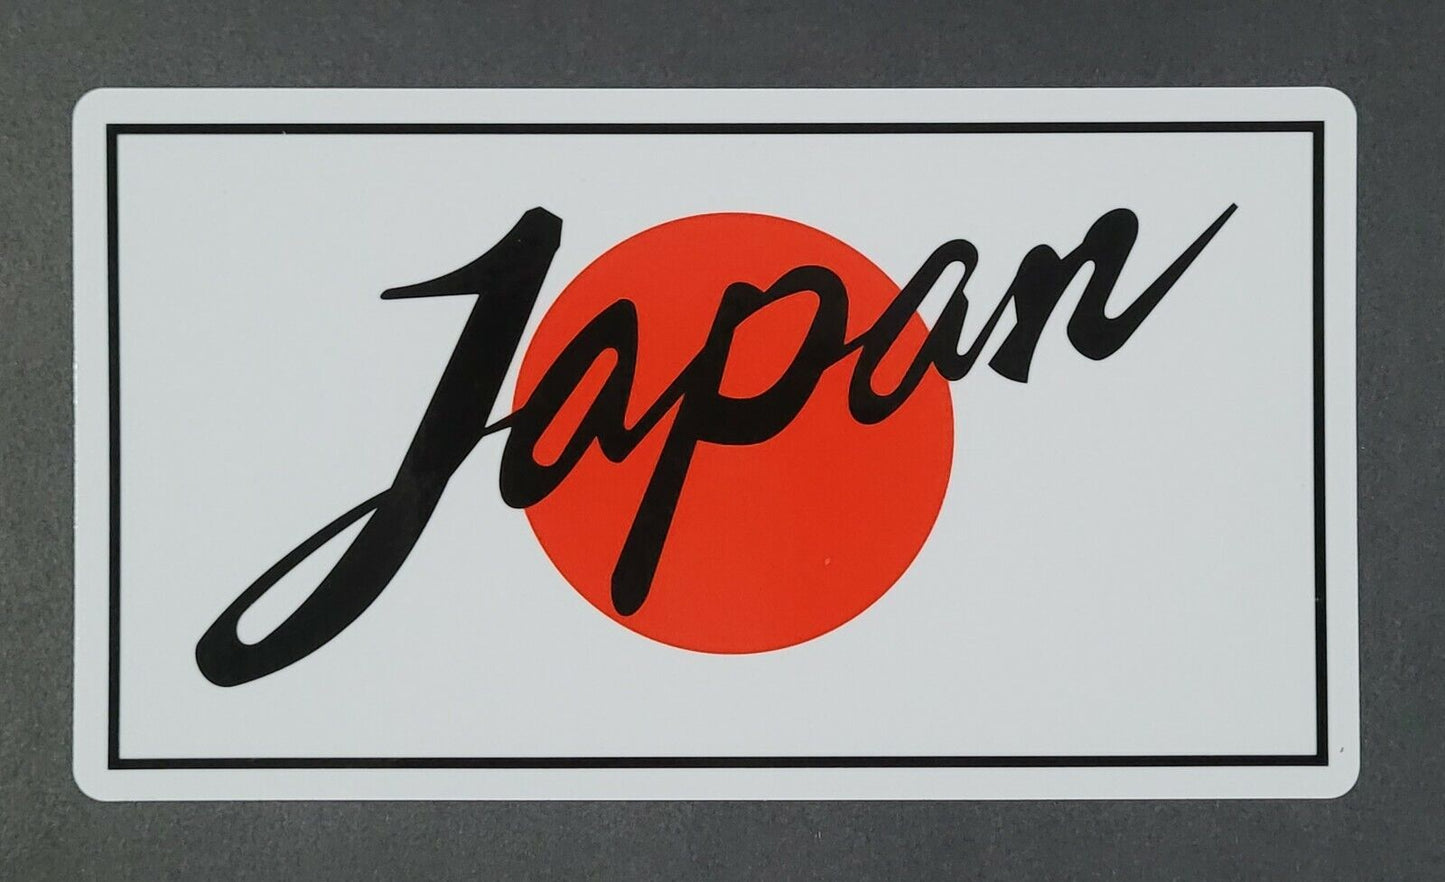 Japan 10cm x 18cm Vinyl Sticker / decal Windows Automotive Marine.